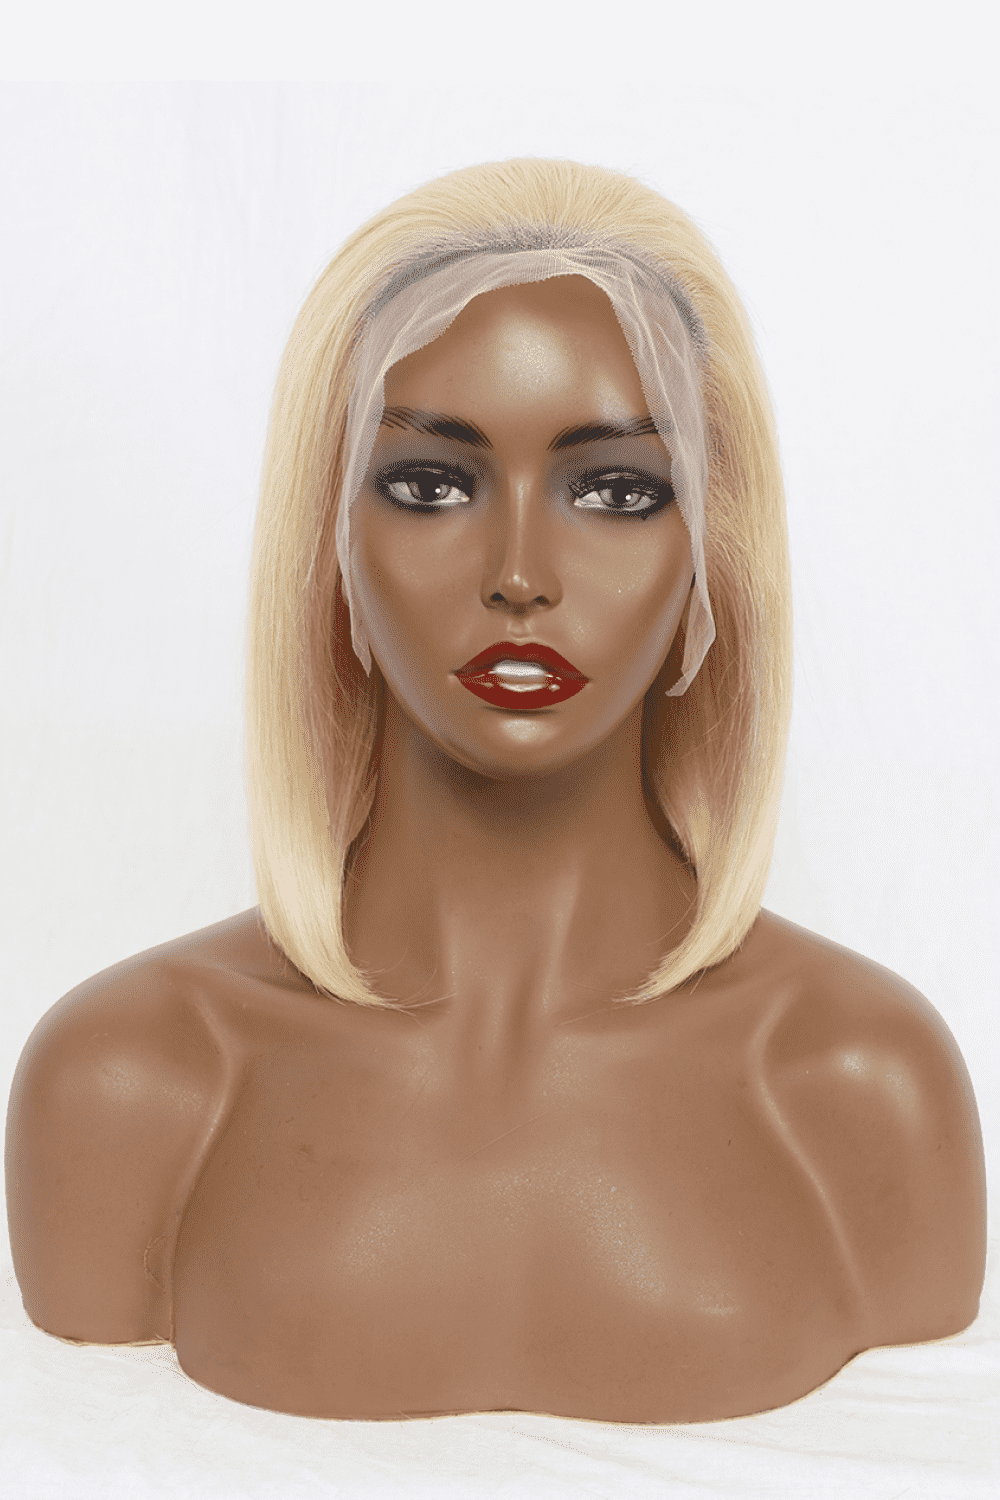 HUMAN HAIR 12" Blonde 165g Lace Front Wig Thick 150% Density Shoulder Length Bob